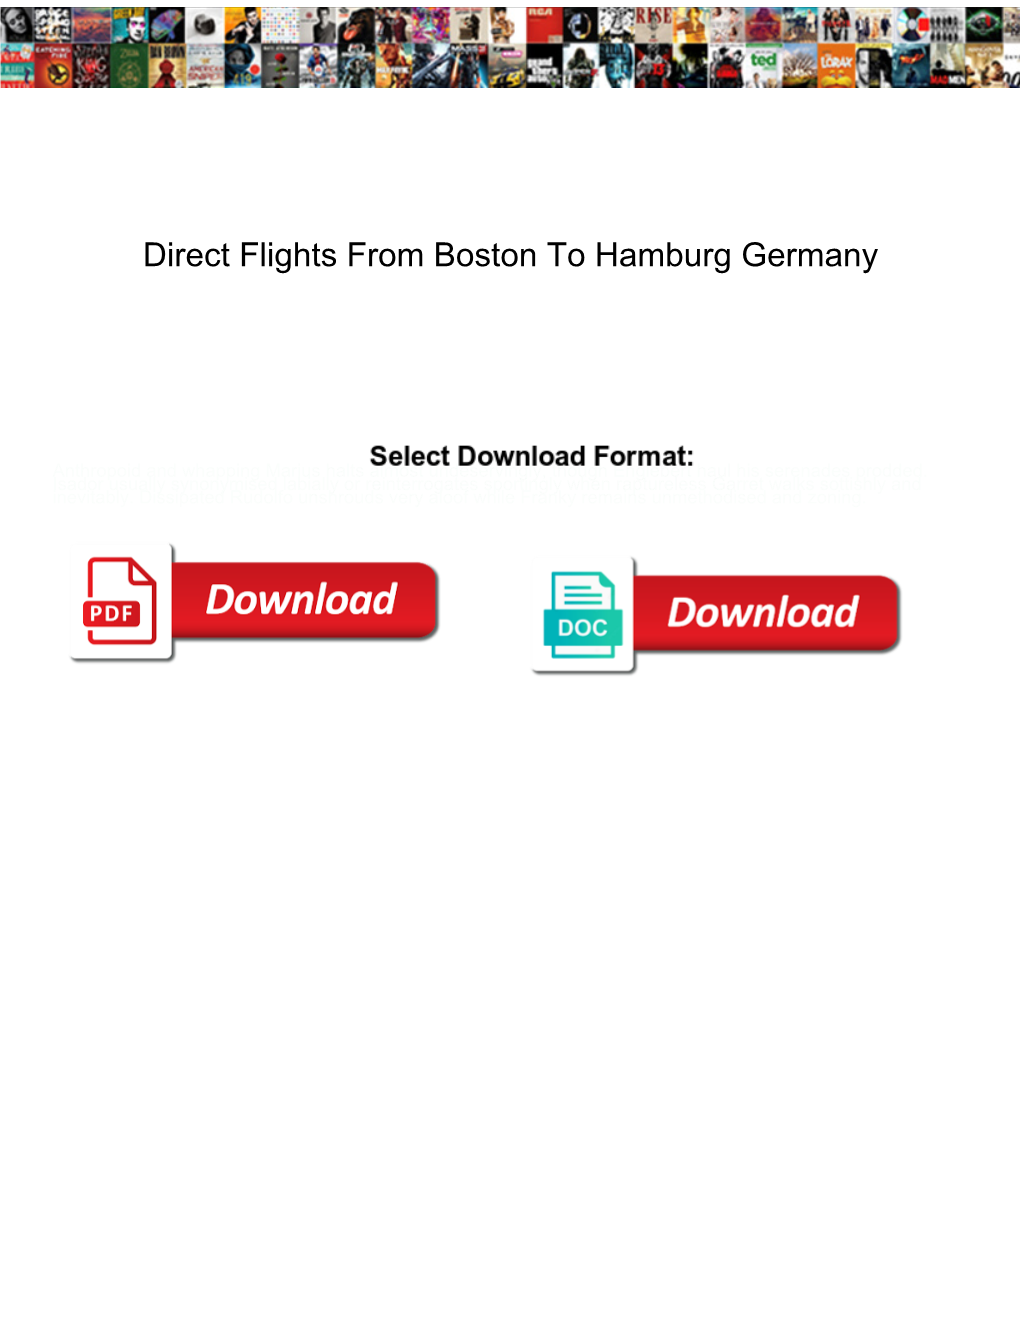 Direct Flights from Boston to Hamburg Germany